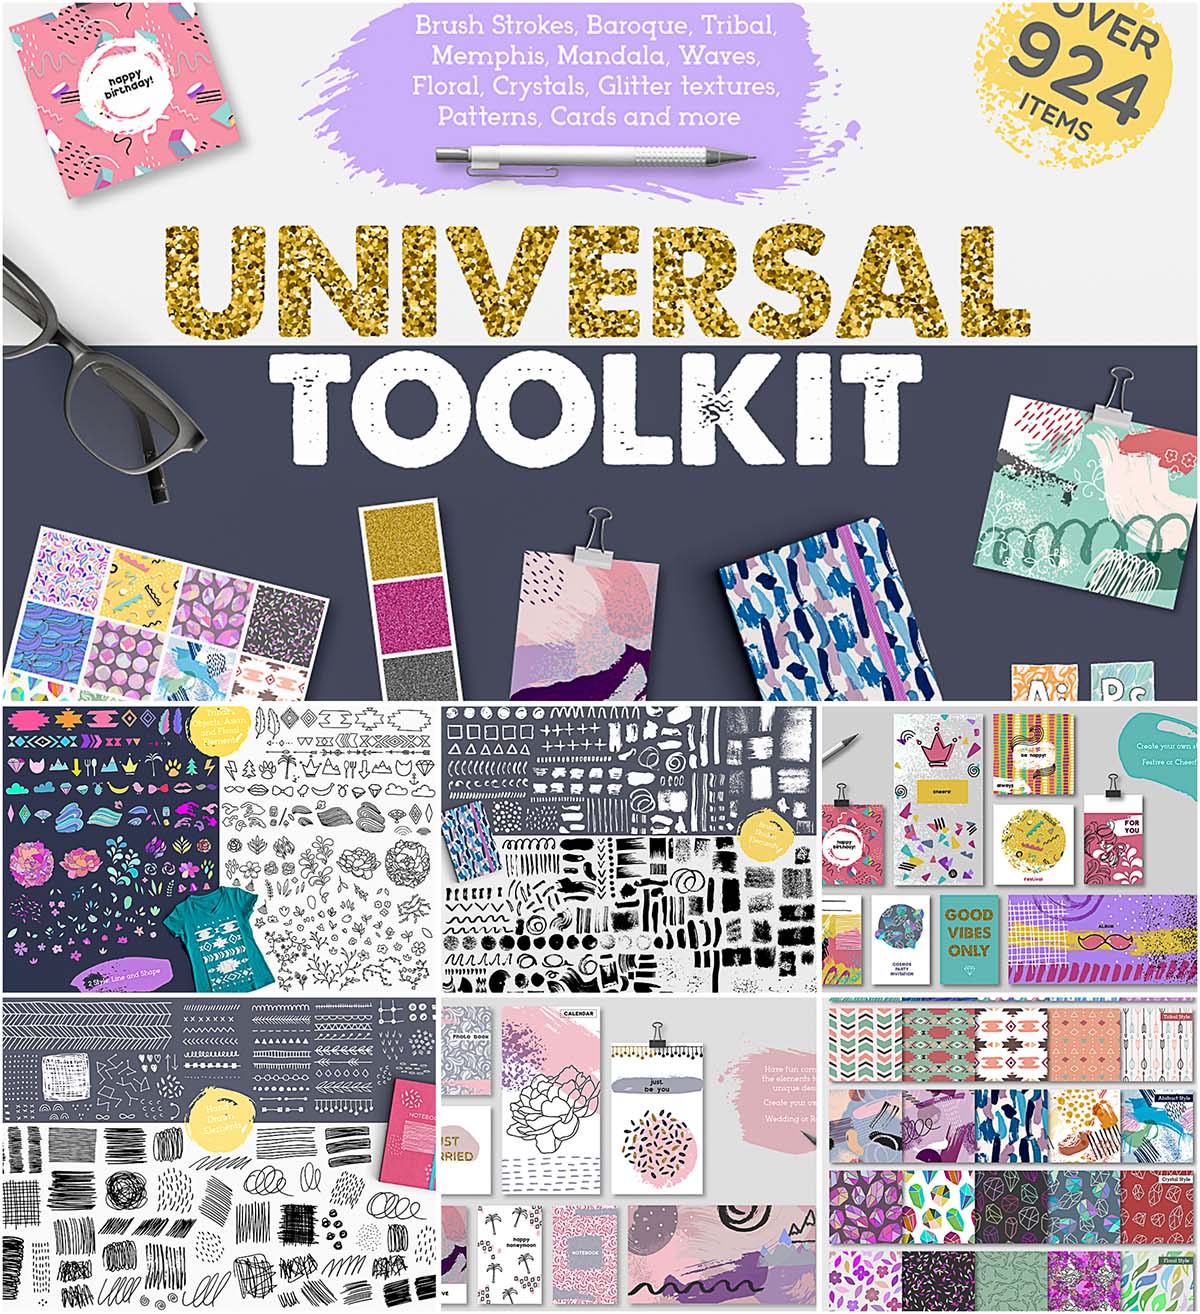 Universal toolkit 924 elements